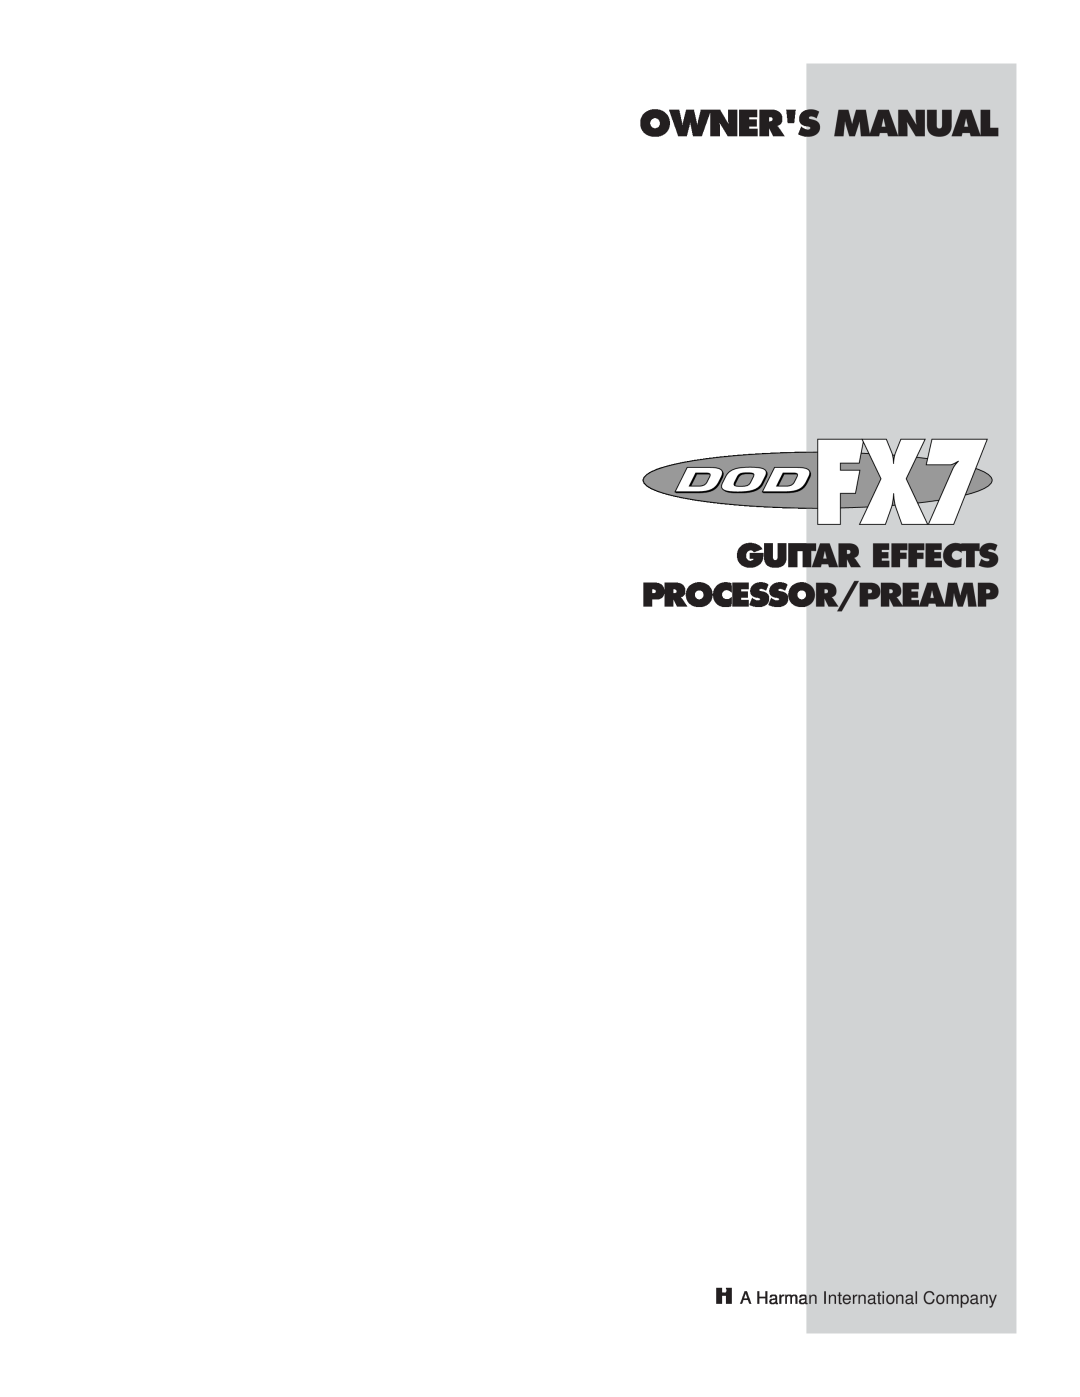 DOD FX7 owner manual A Harman International Company, Guitar Effects Processor/Preamp 